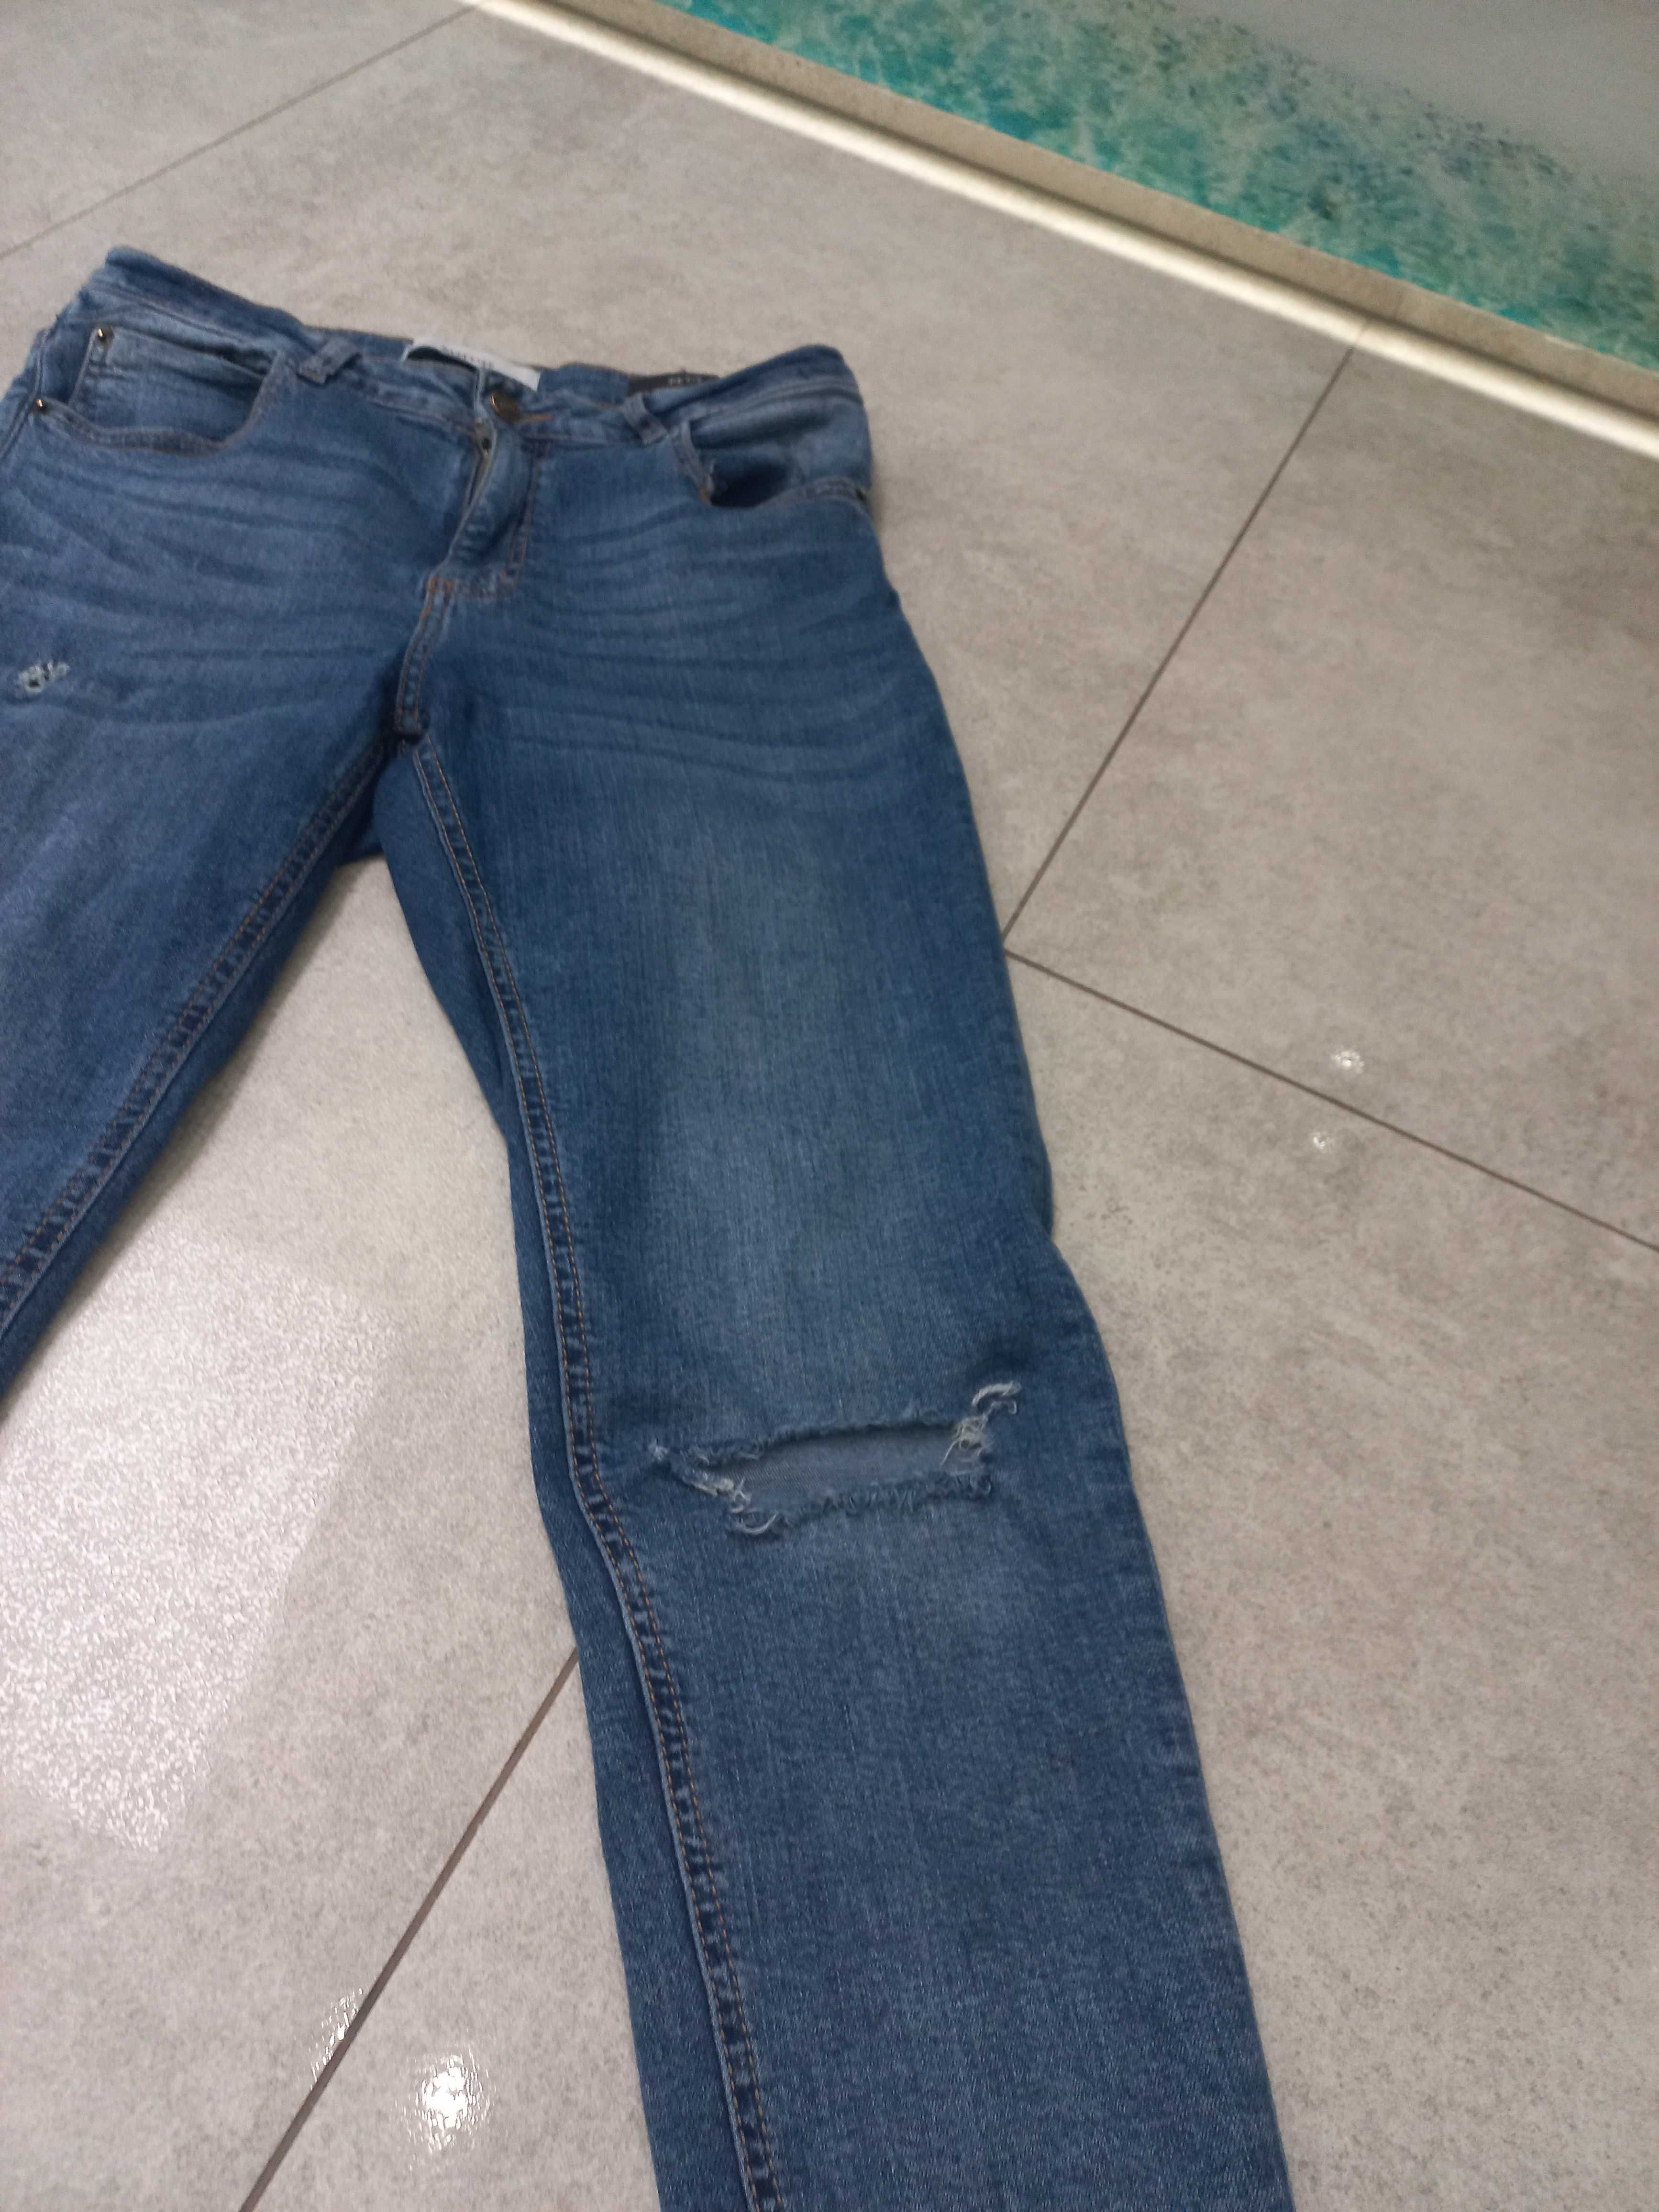 Spodnie jeansowebdamskien38 reserved